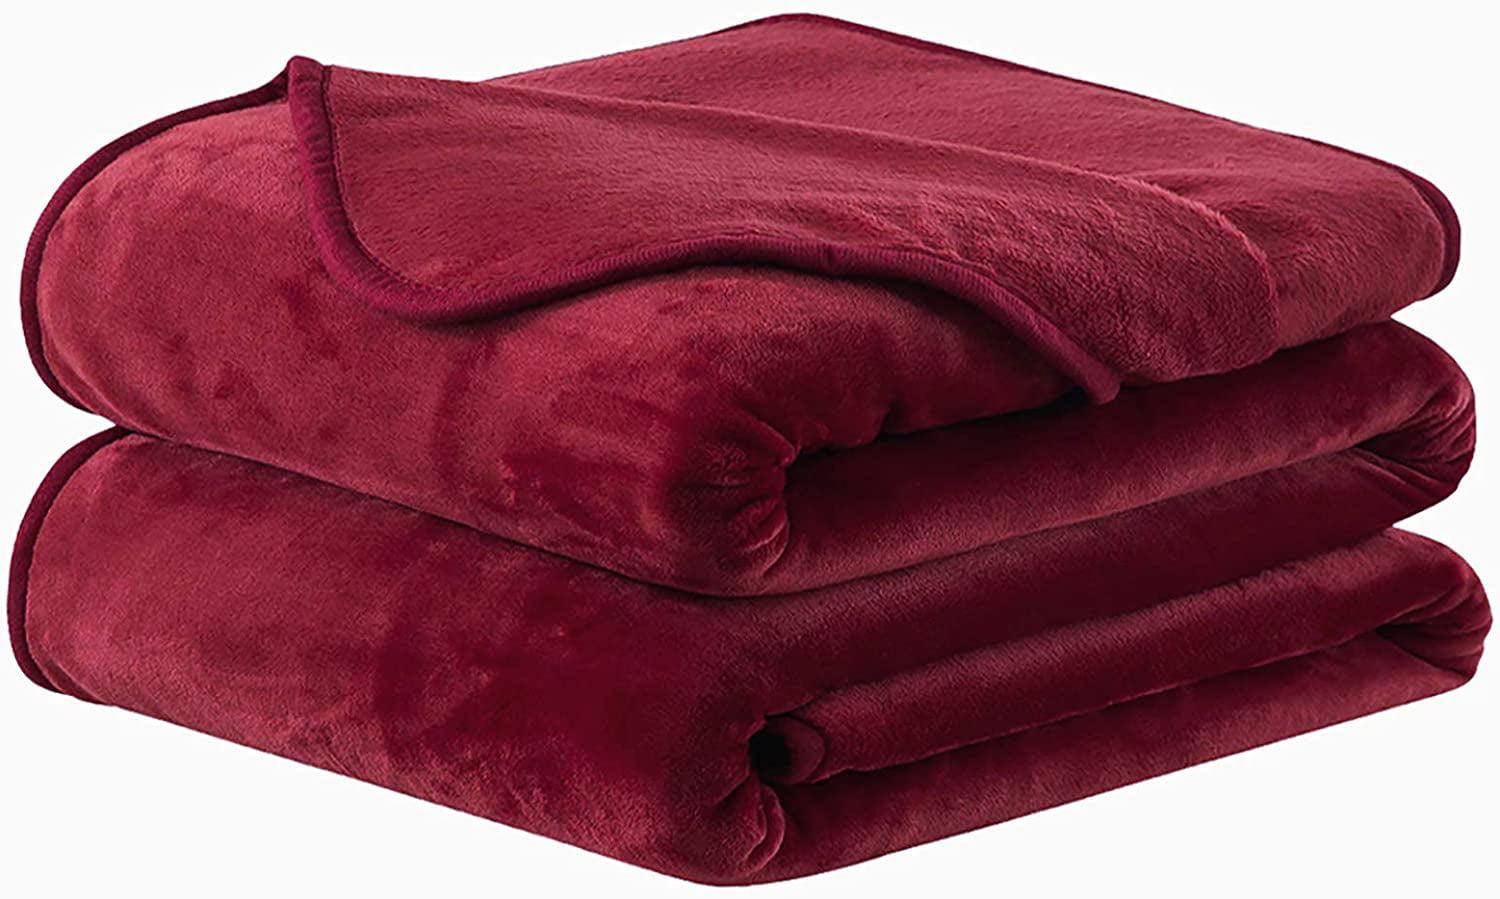 EASELAND Soft California King Blanket Warm Fuzzy Microplush Lightweight